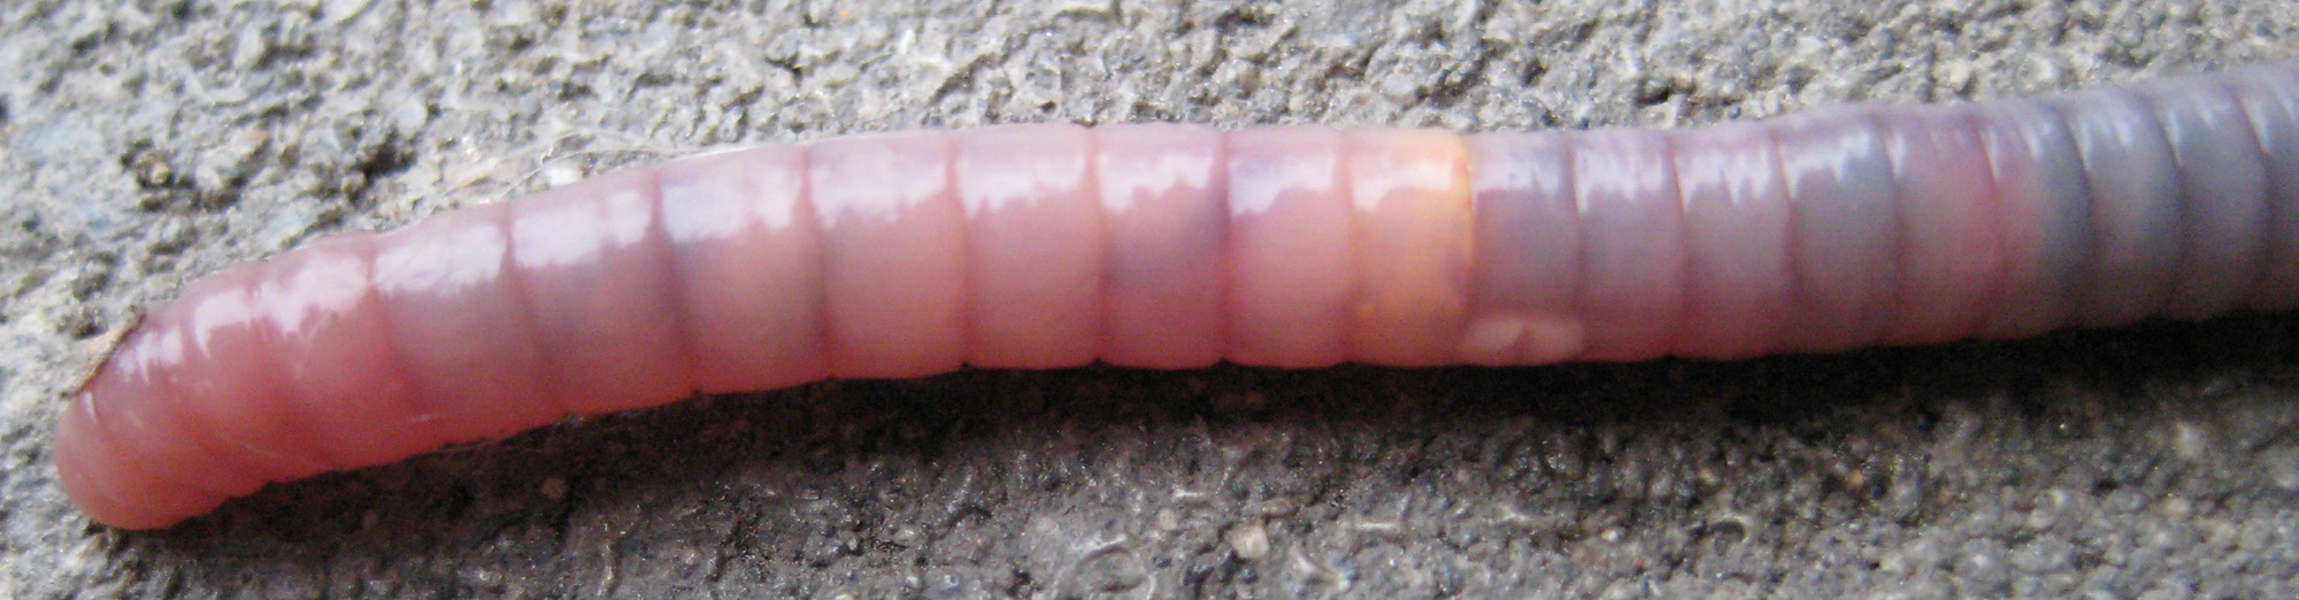 AnimalsVarious0003 - Free Background Texture - animal worm earthworm pink